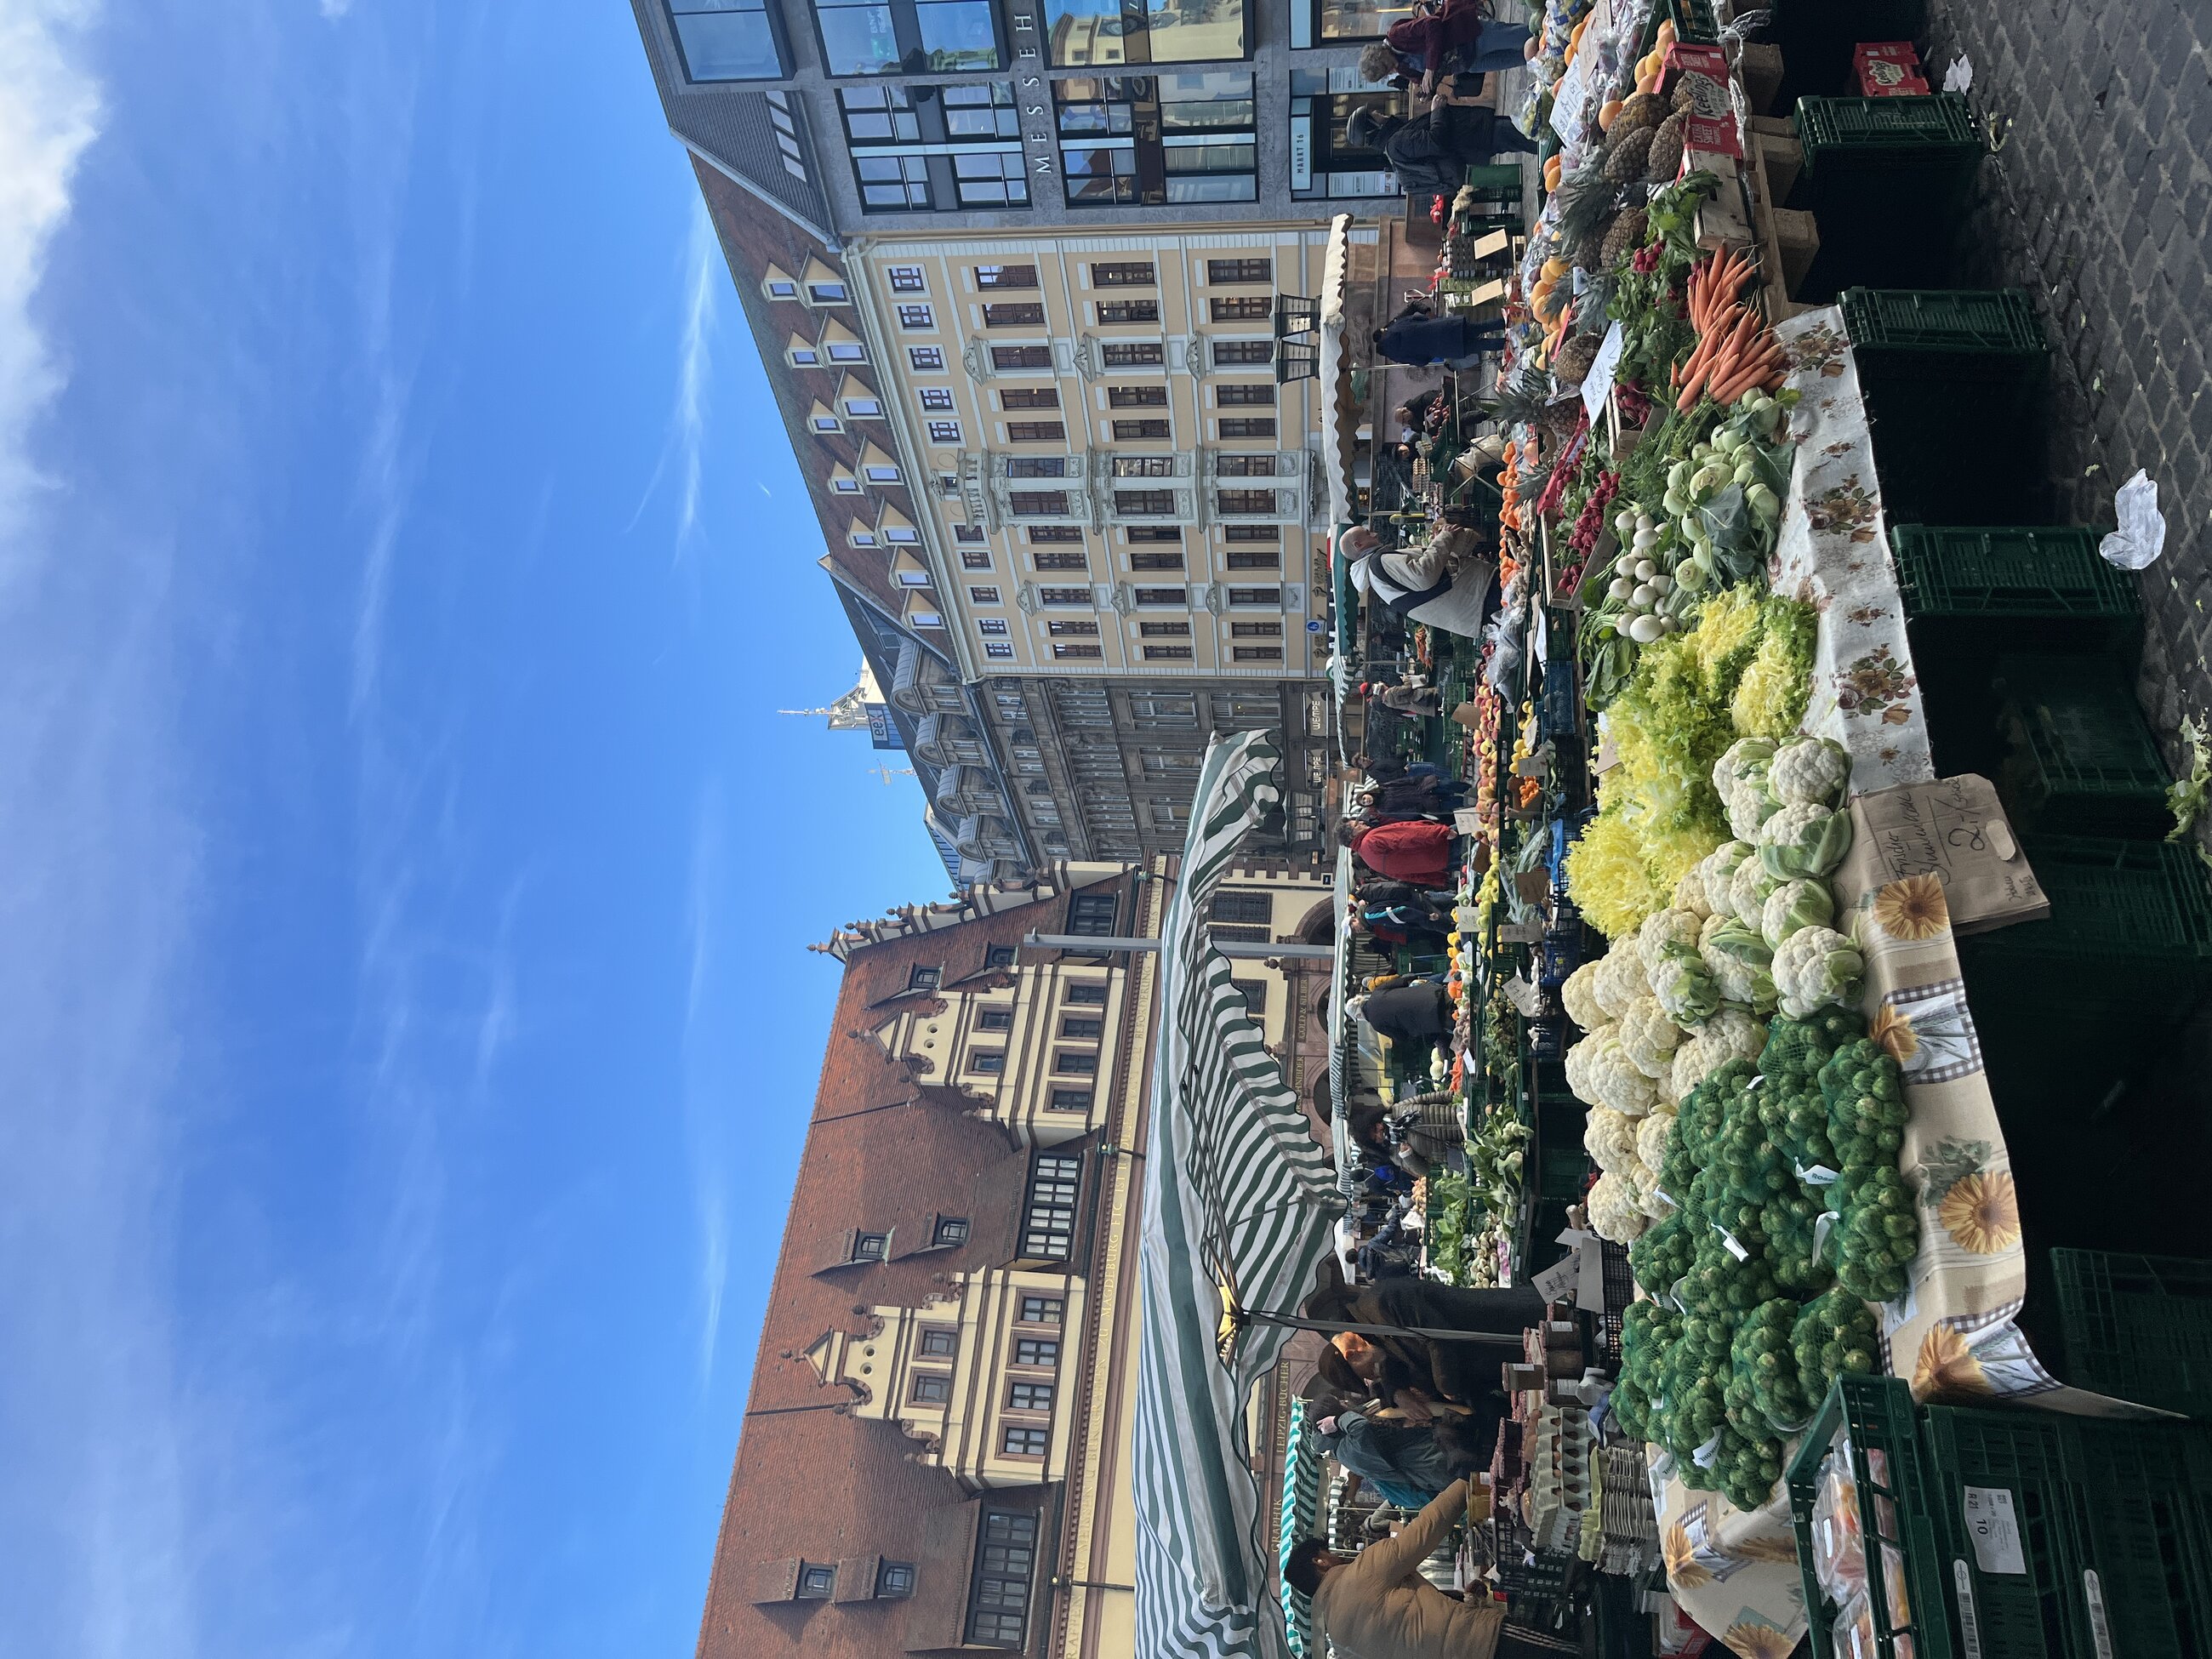 Market in Leipzig